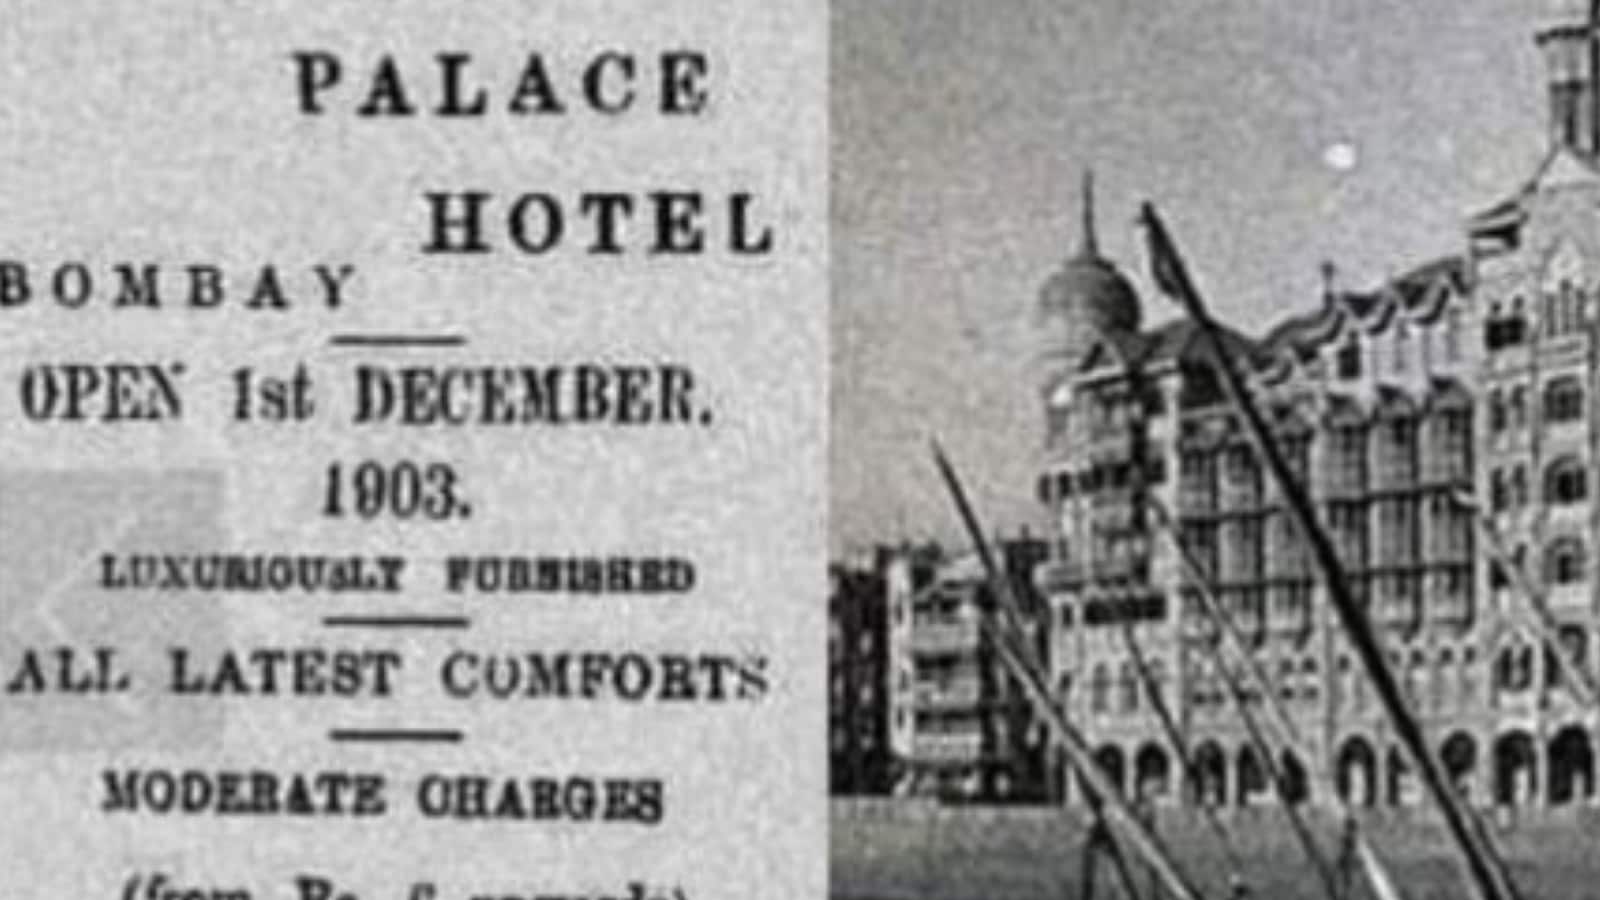 Anand Mahindra Shares Old Photo of Mumbai's Taj Hotel When Rooms Cost Rs 6 Per Night